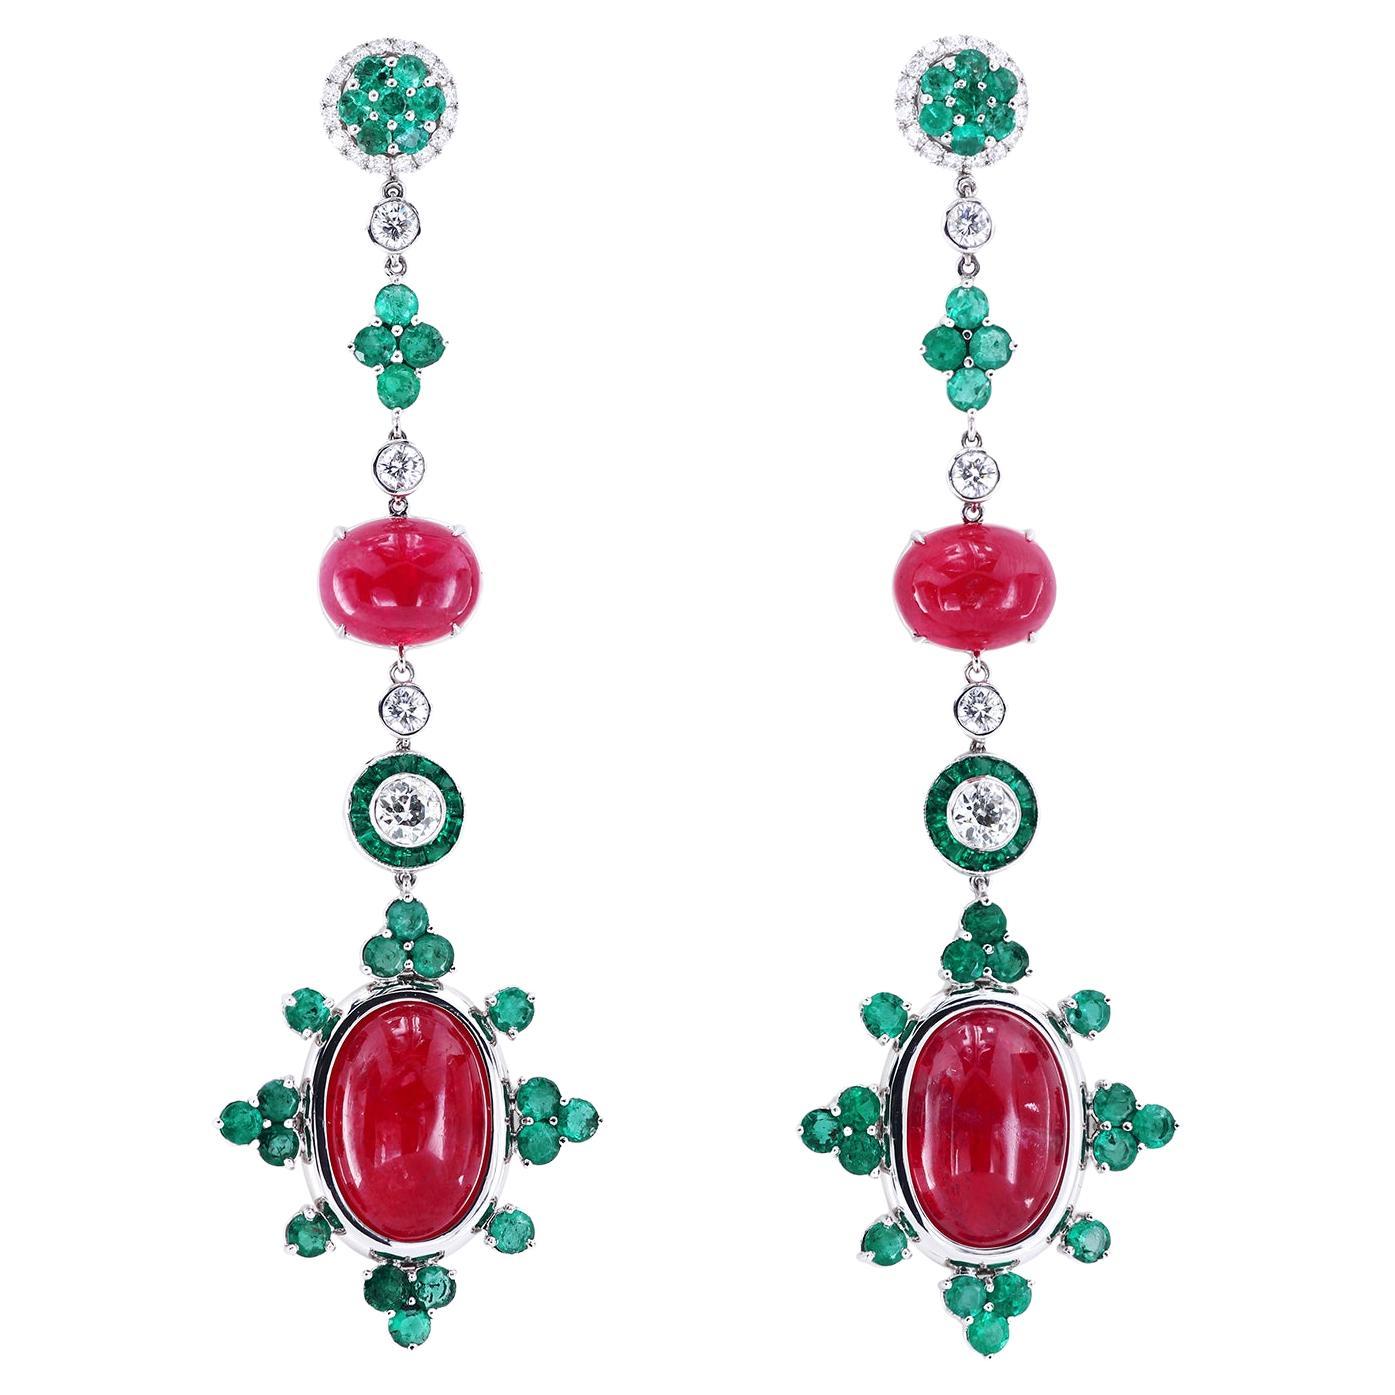 Leon Mege platinum drop earrings with Rhodonites, emeralds and diamonds